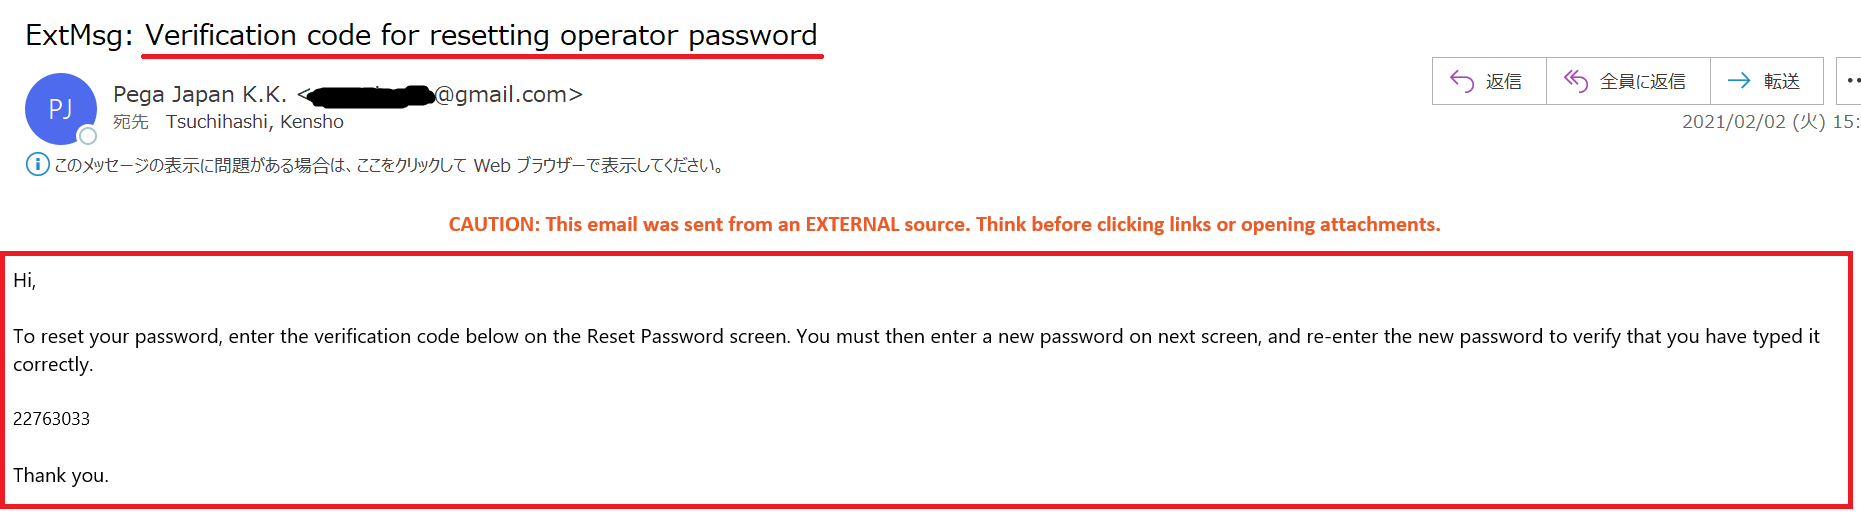 Verification code for resetting operator password (English)